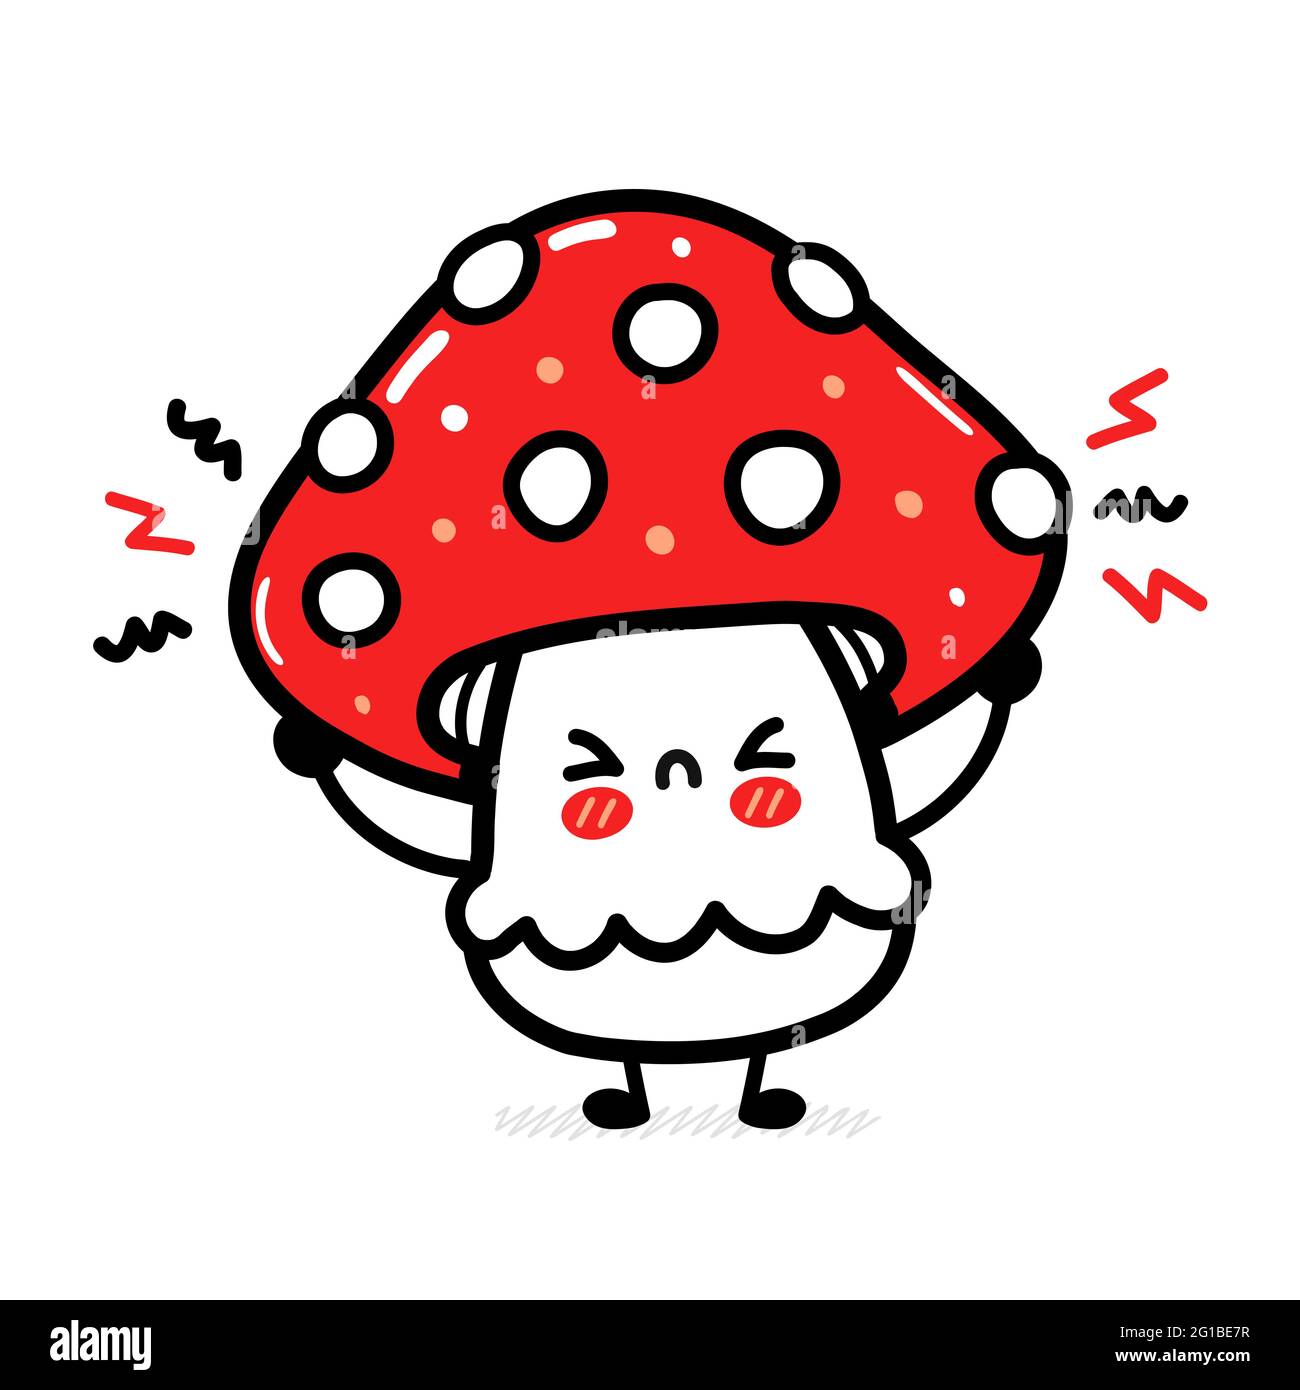 Cute funny sad happy amanita mushroom. Vector hand drawn cartoon kawaii character illustration icon. Isolated on white background. Funny amanita mushroom mascot character concept Stock Vector